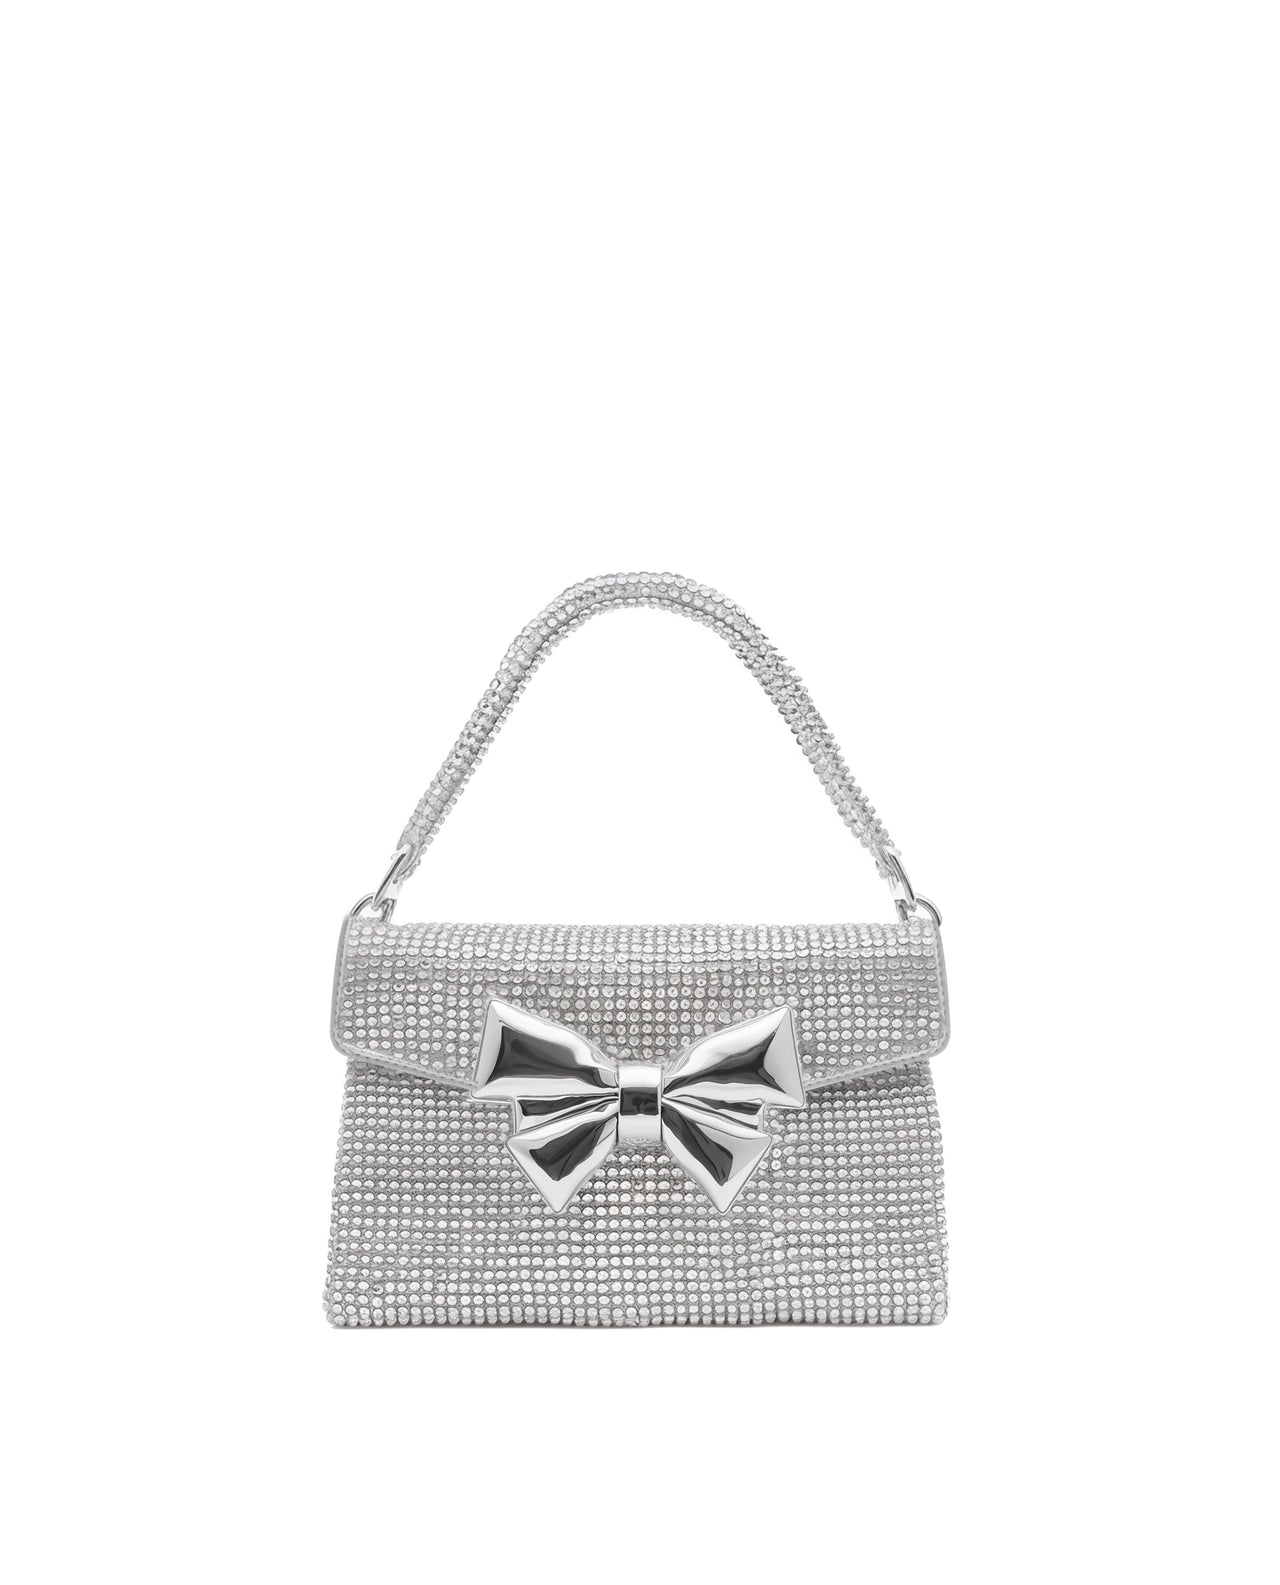 Crystal Bow Handbag - Silver